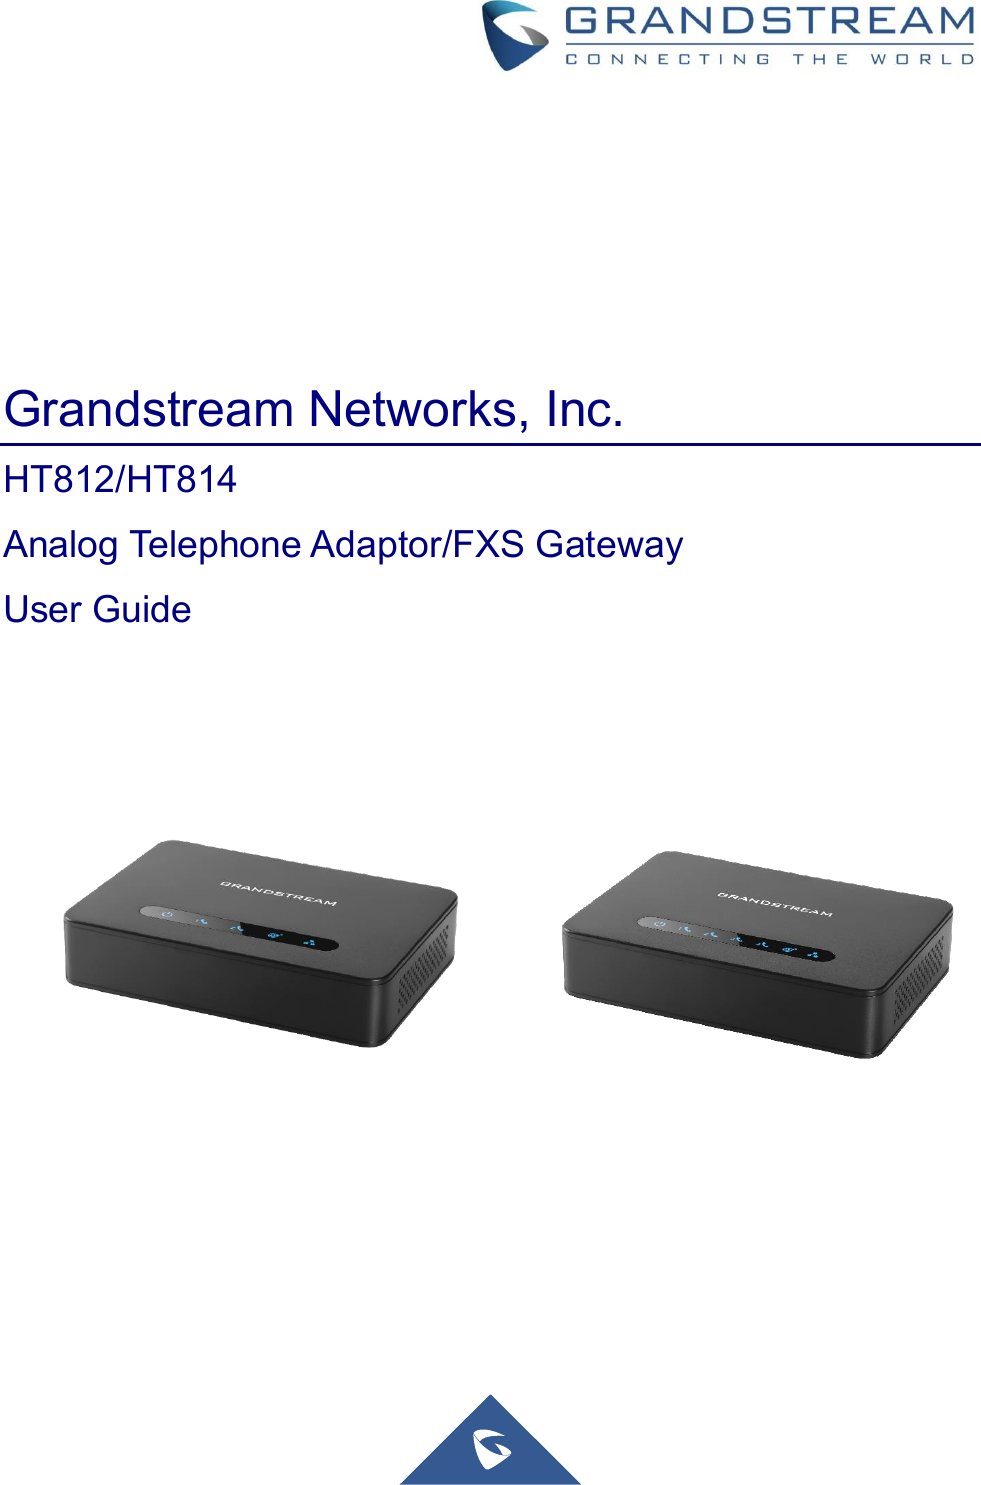                    Grandstream Networks, Inc. HT812/HT814   Analog Telephone Adaptor/FXS Gateway User Guide   